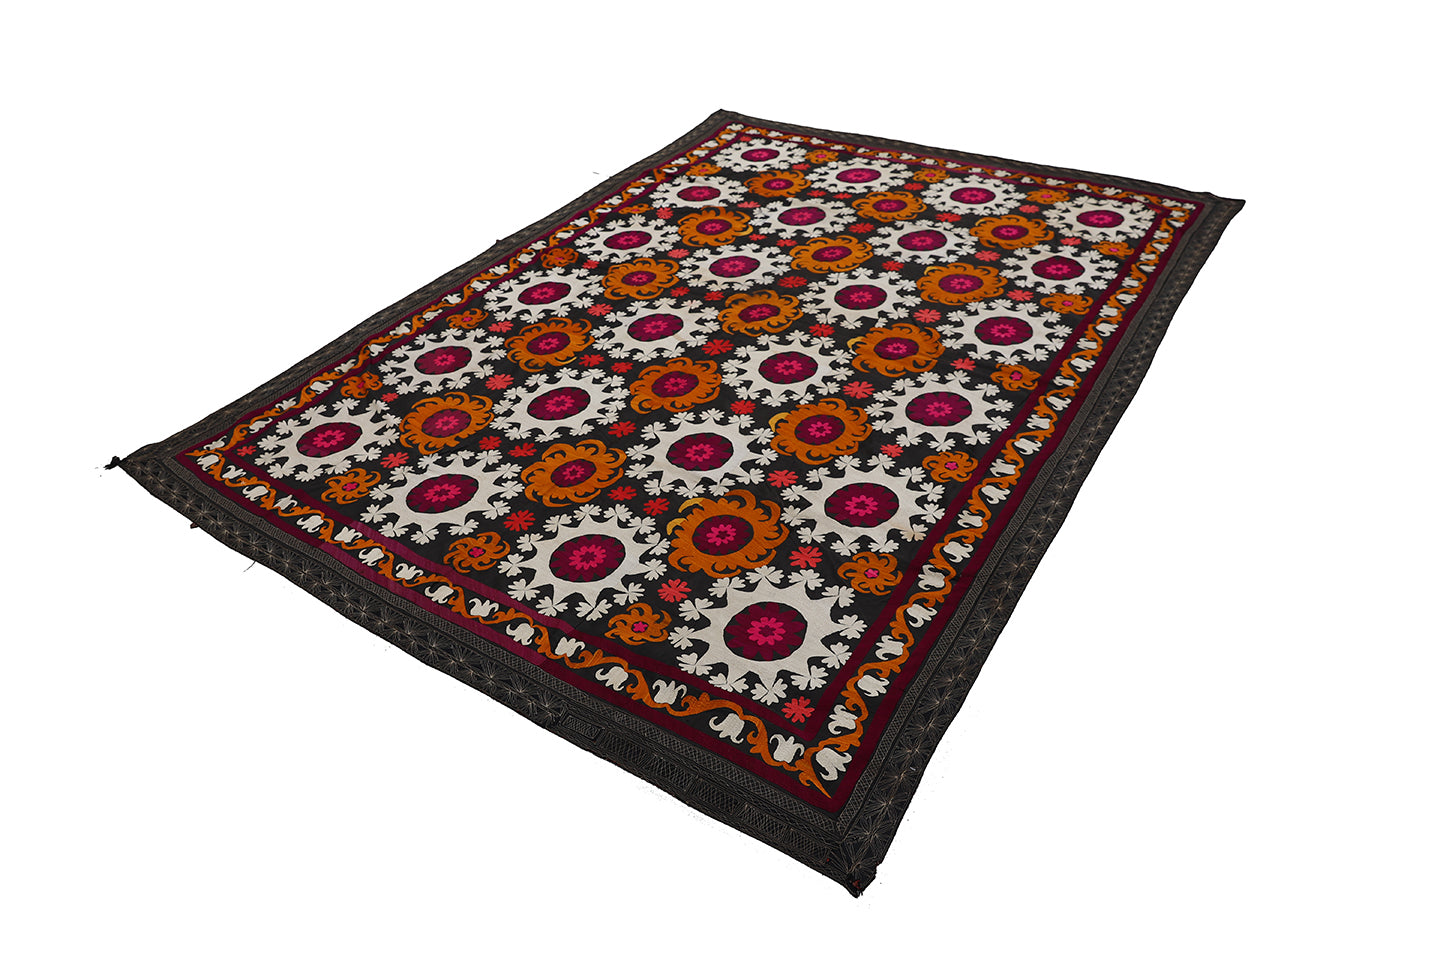 6'x9' Colorful Vintage Uzbek Tapestry Textile